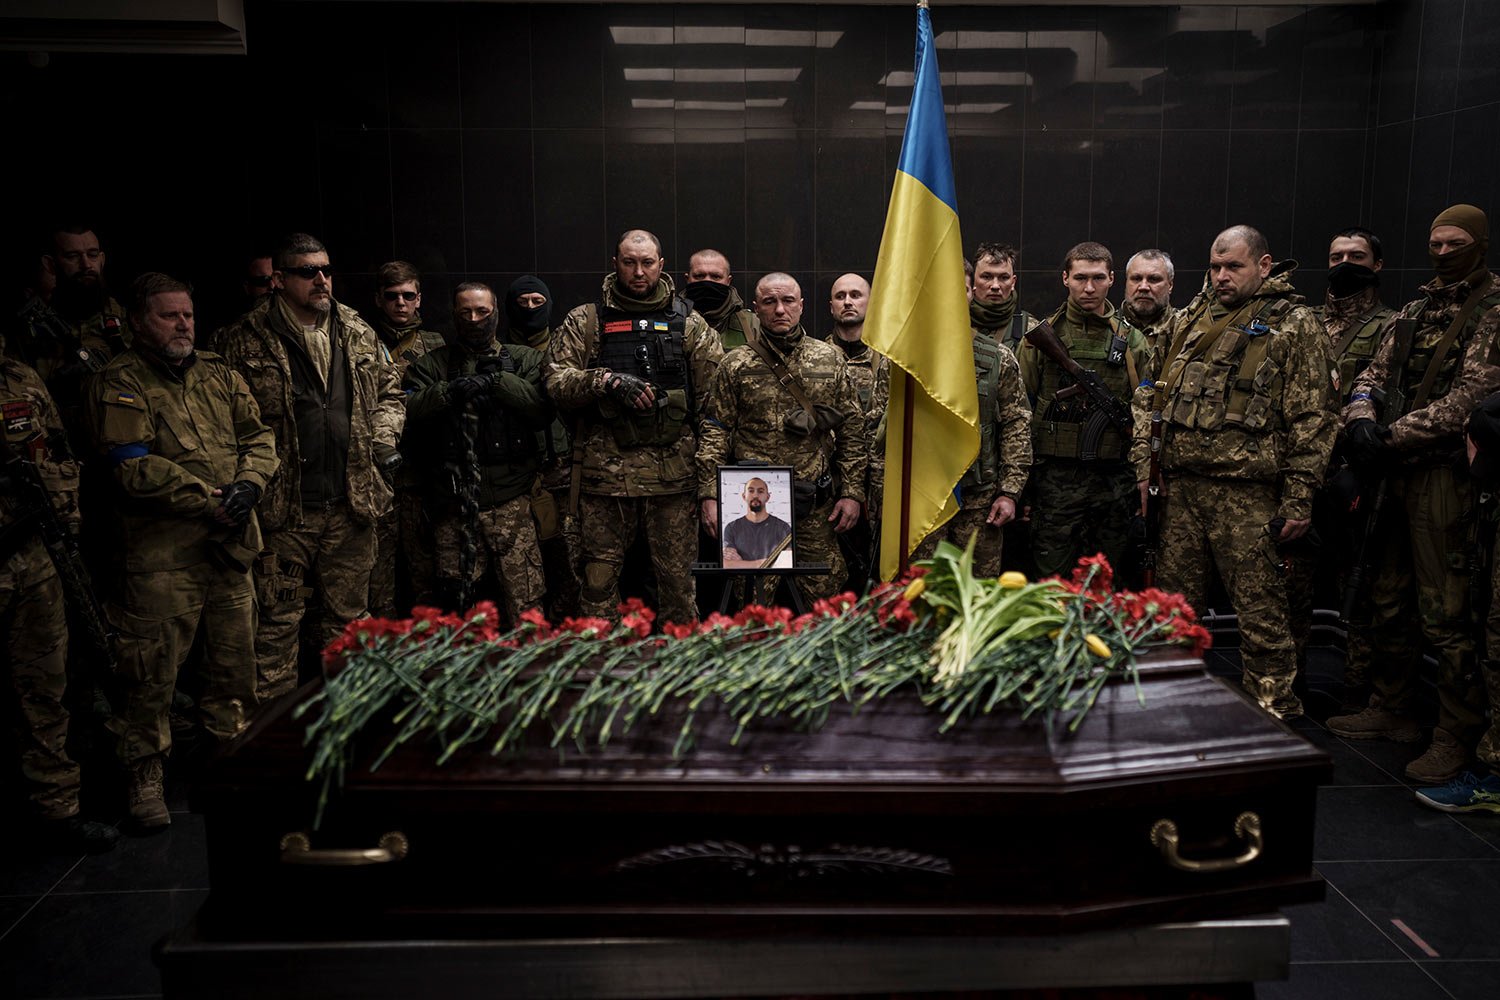  Ukrainian servicemen attend the funeral ceremony of marine Alexandr Khovtun, in Kyiv, Ukraine, Sunday, March 20, 2022. Khovtun died in combat in the town of Huta-Mezhyhirska, north of Kyiv. (AP Photo/Felipe Dana)  